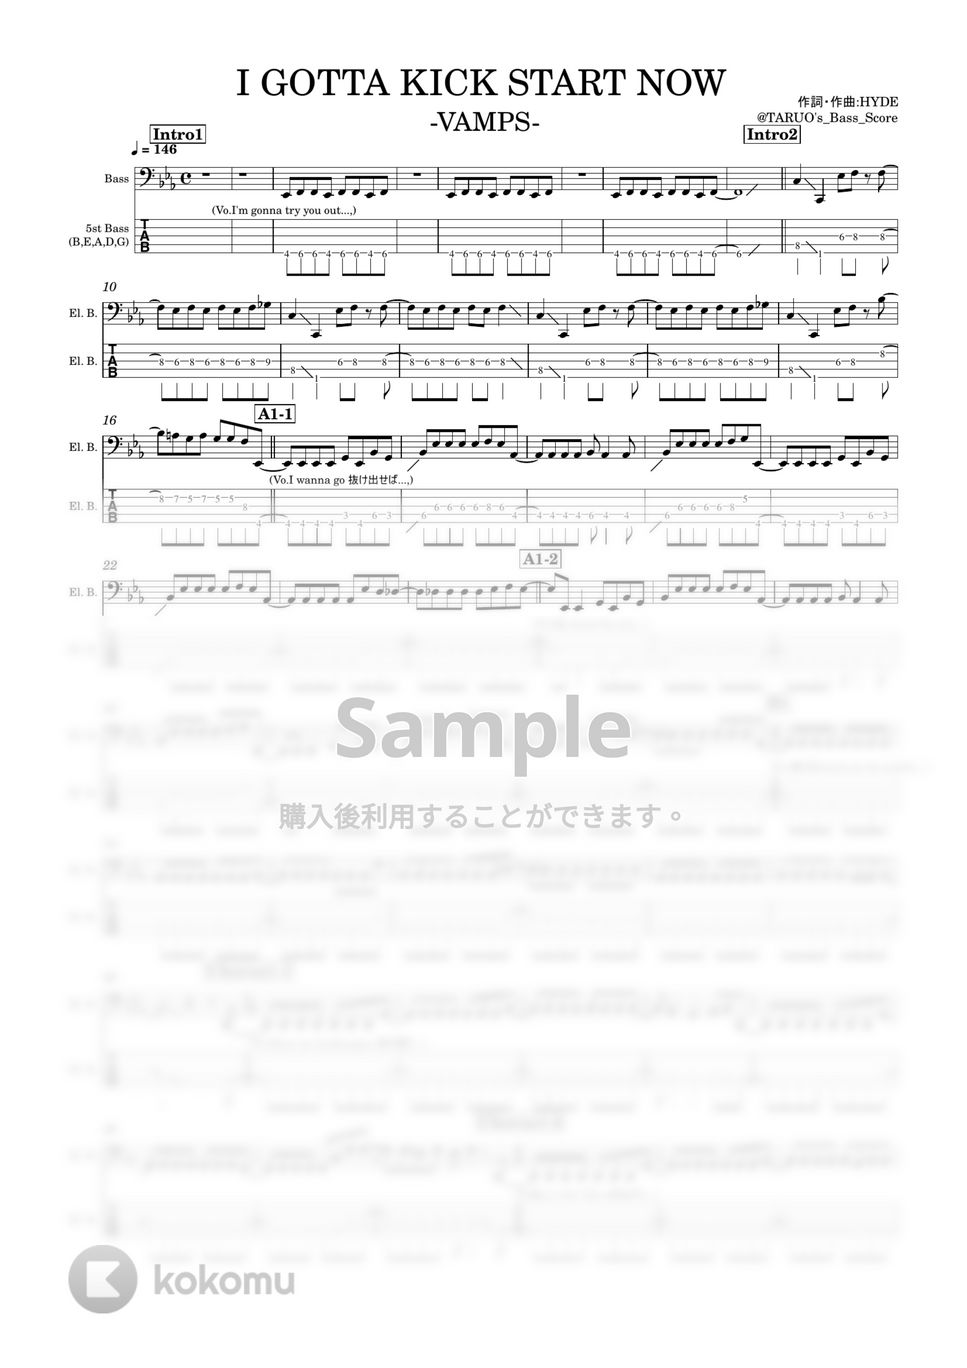 VAMPS - I GOTTA KICK START NOW (VAMPS/ベース/5弦/HYDE/Ju-ken) by TARUO's_Bass_Score